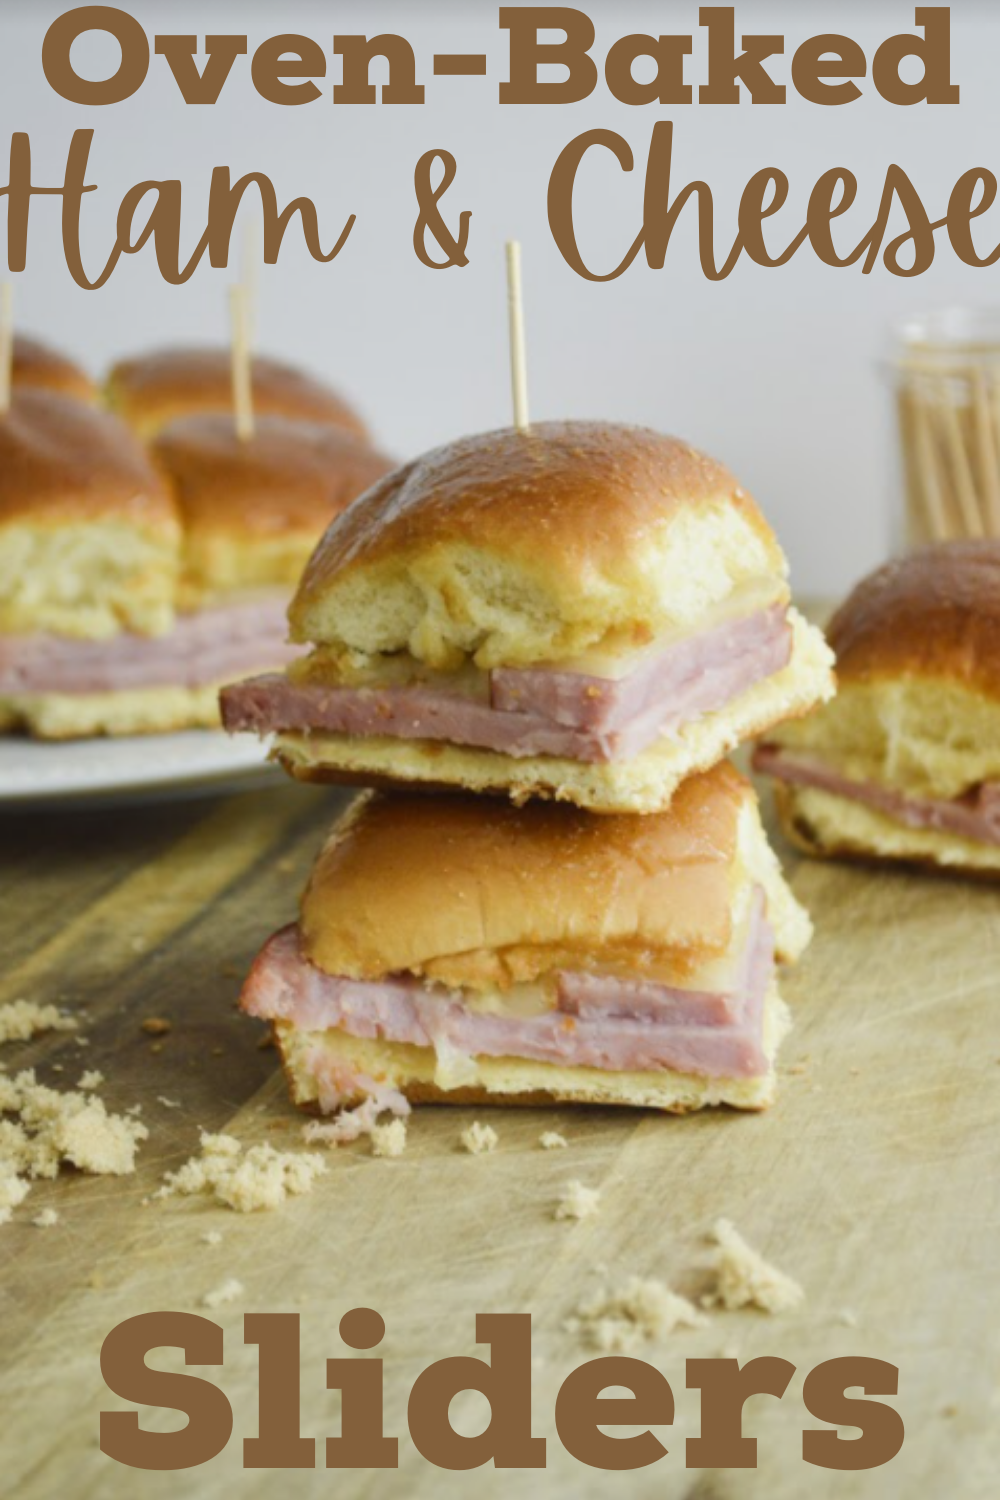 Oven-Baked Ham & Cheese Sliders